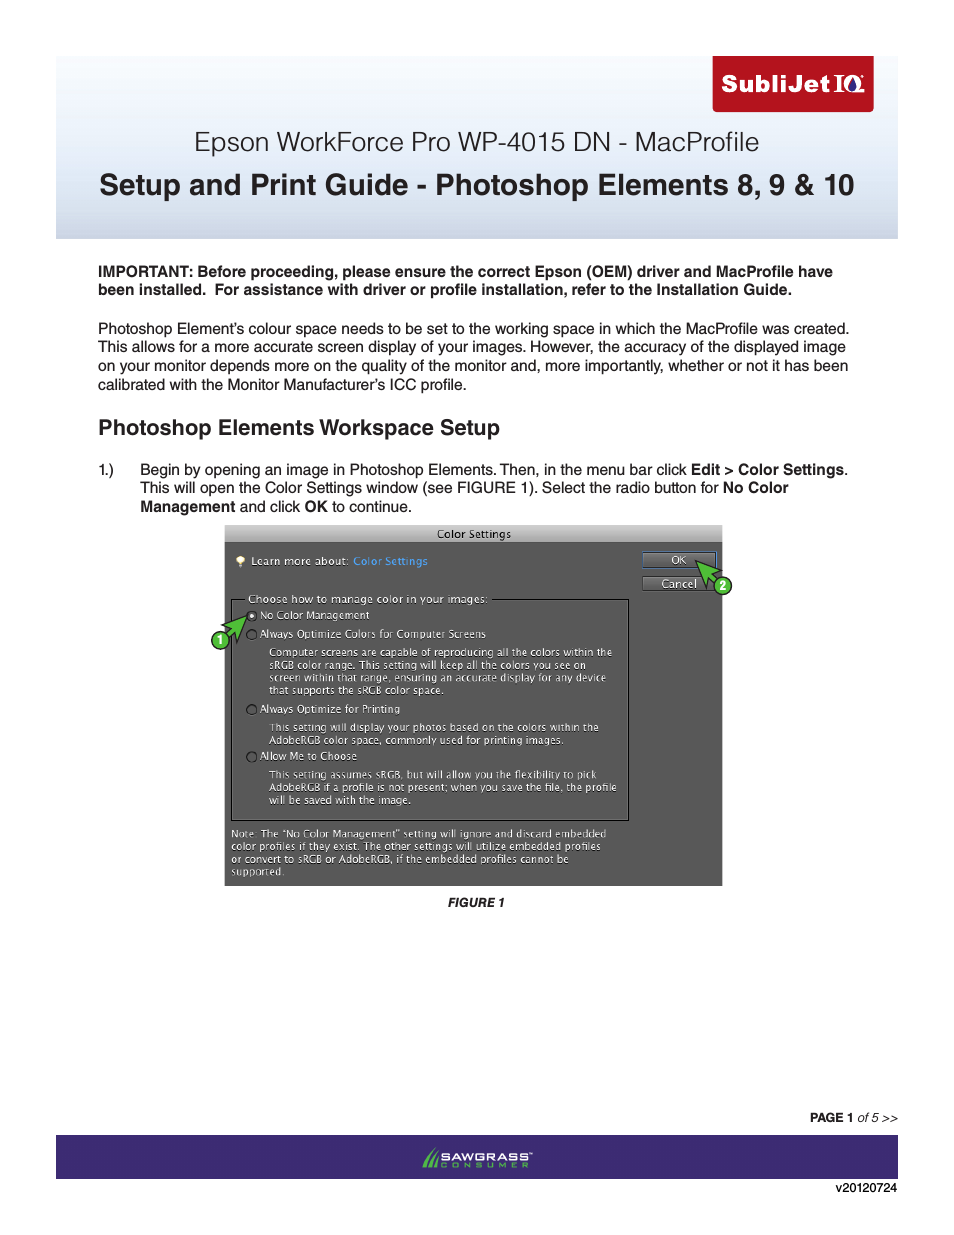 SubliJet IQ Epson WP-4015 (Mac ICC Profile Setup): Print & Setup Guide Photoshop Elements 8 - 10